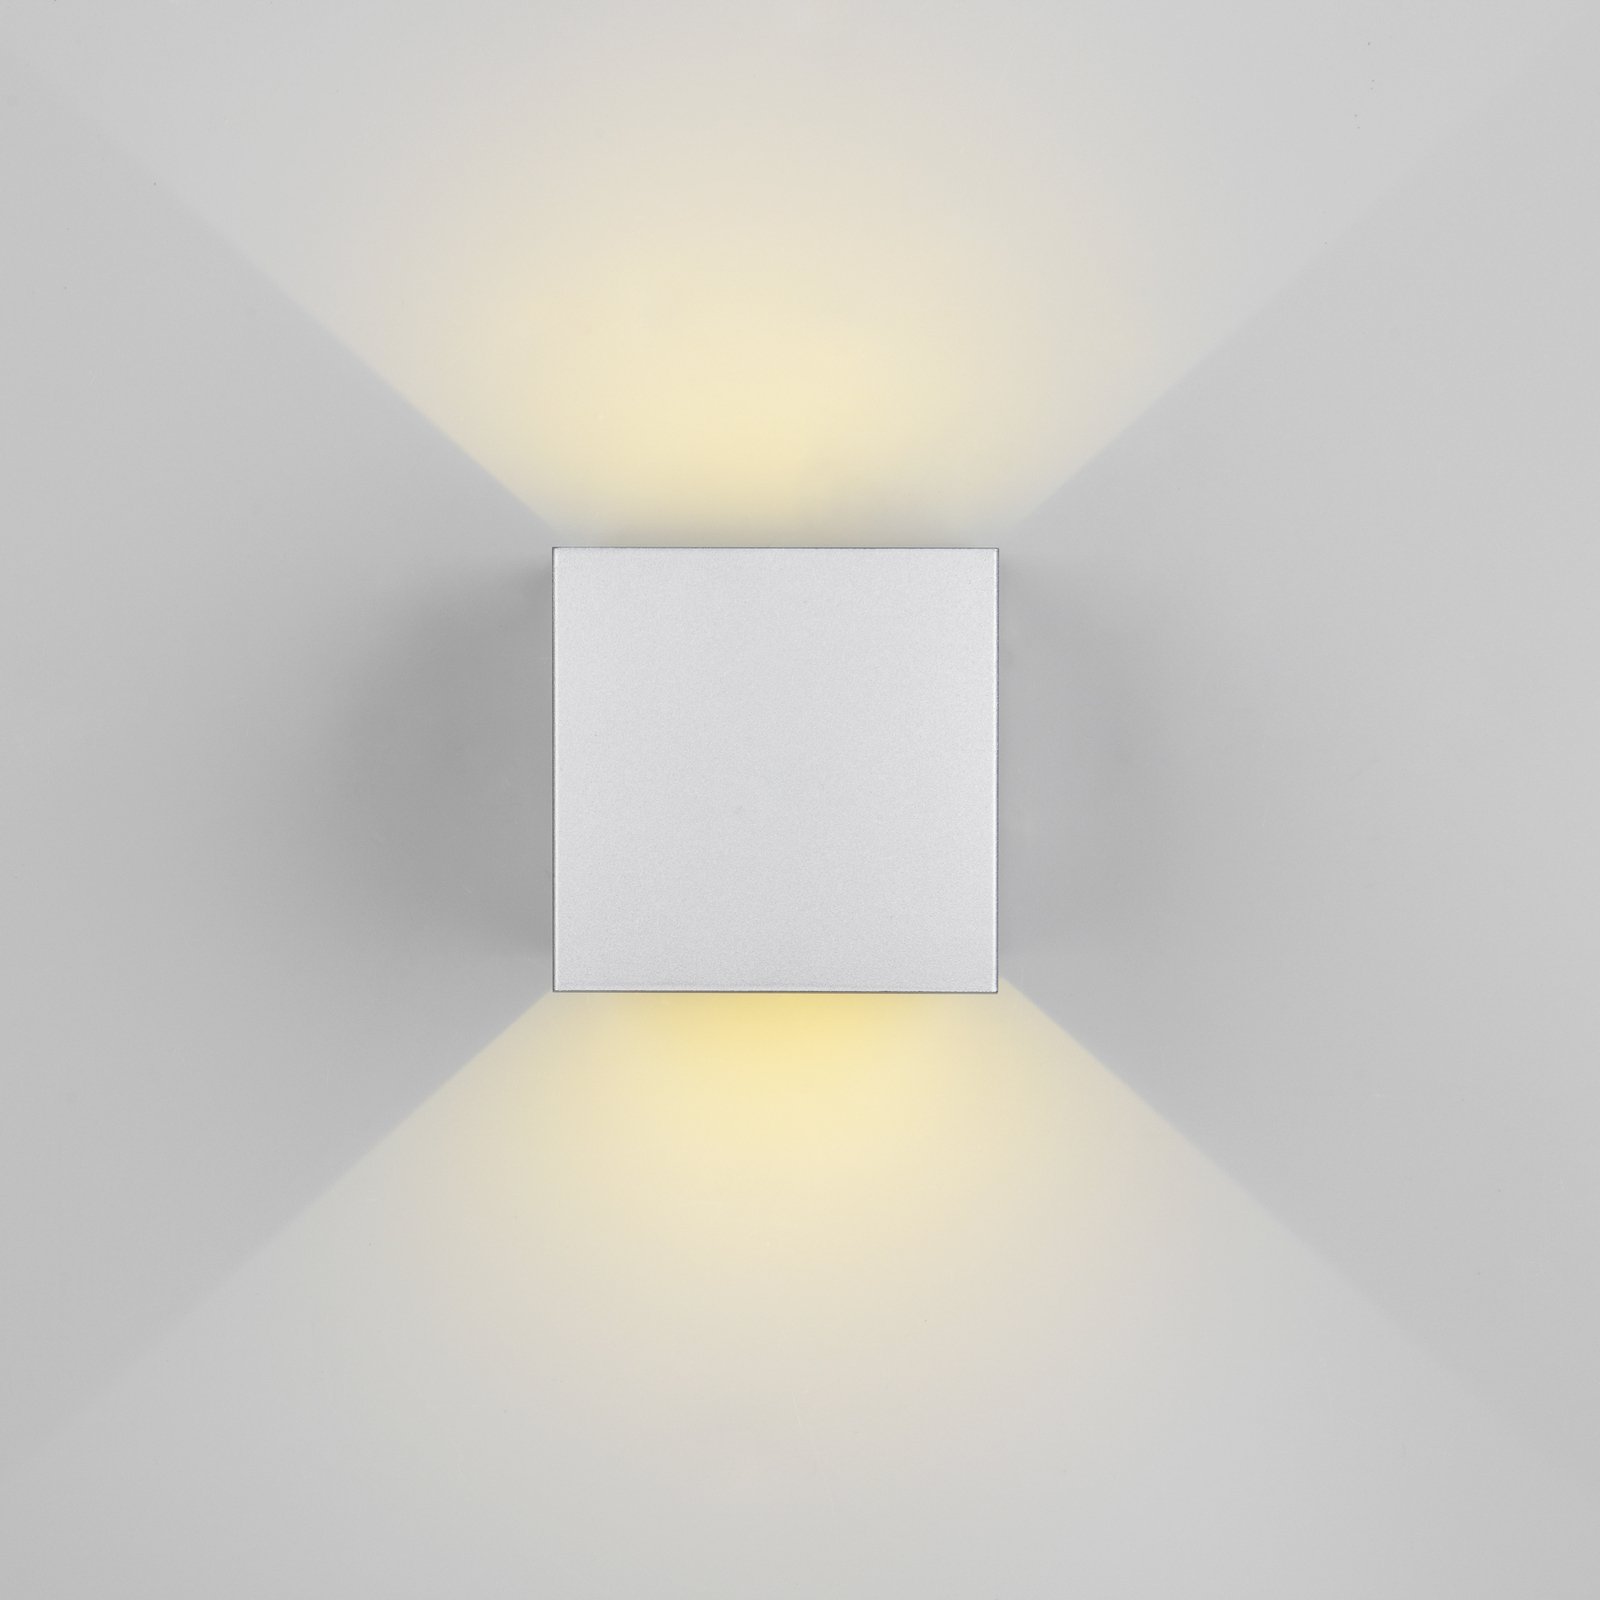 LED-Außenwandlampe Talent, titanfarben, Breite 10 cm, Sensor